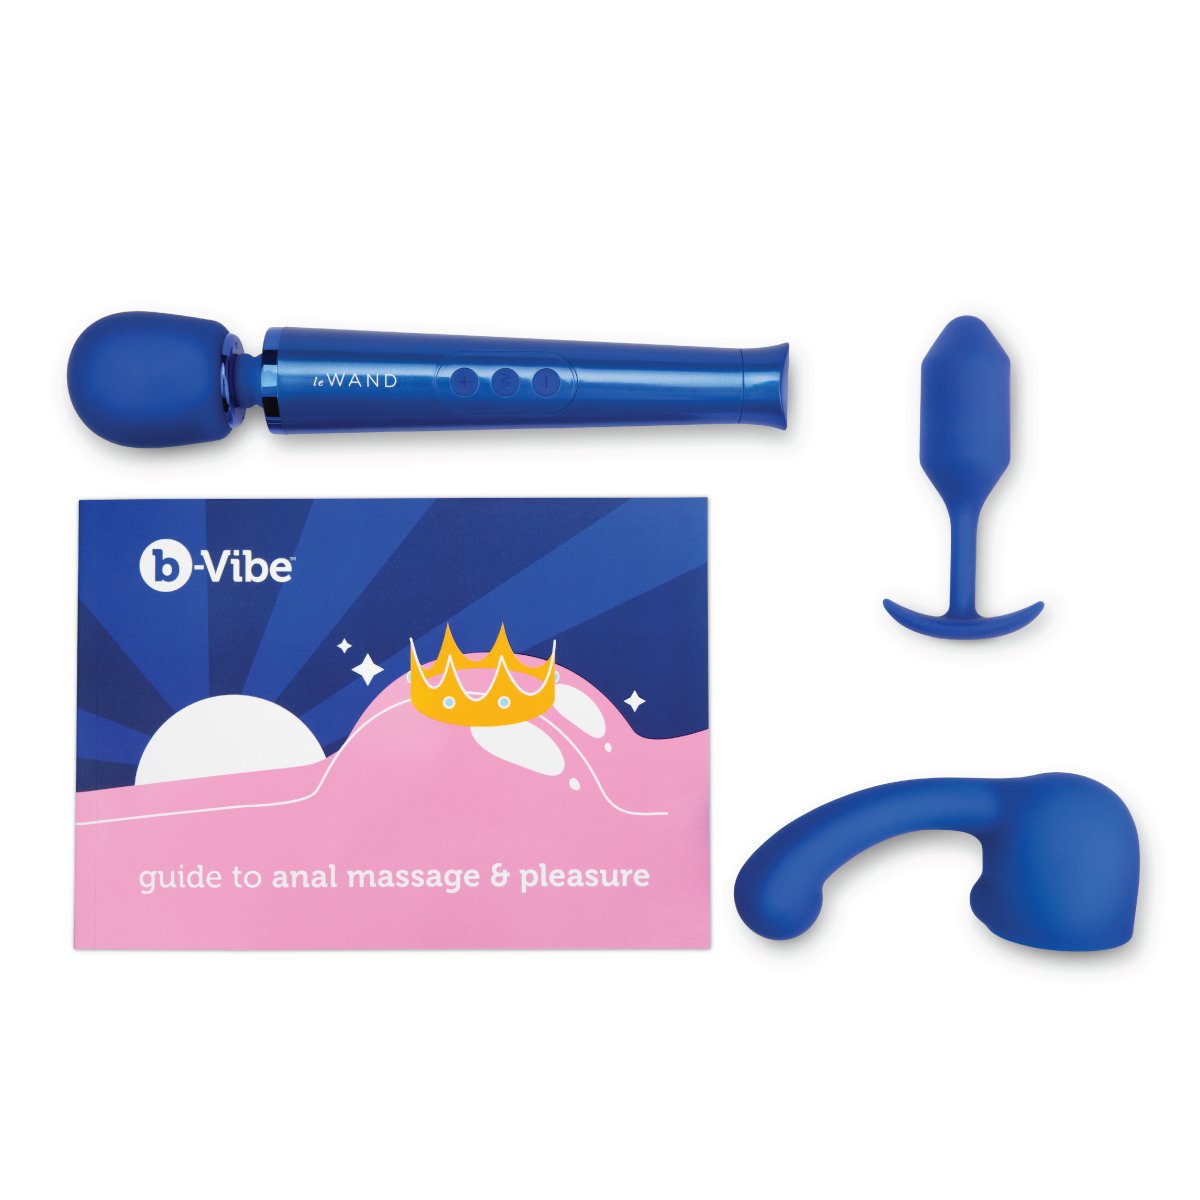 B-Vibe Anal Massage & Education Set - Buy At Luxury Toy X - Free 3-Day Shipping